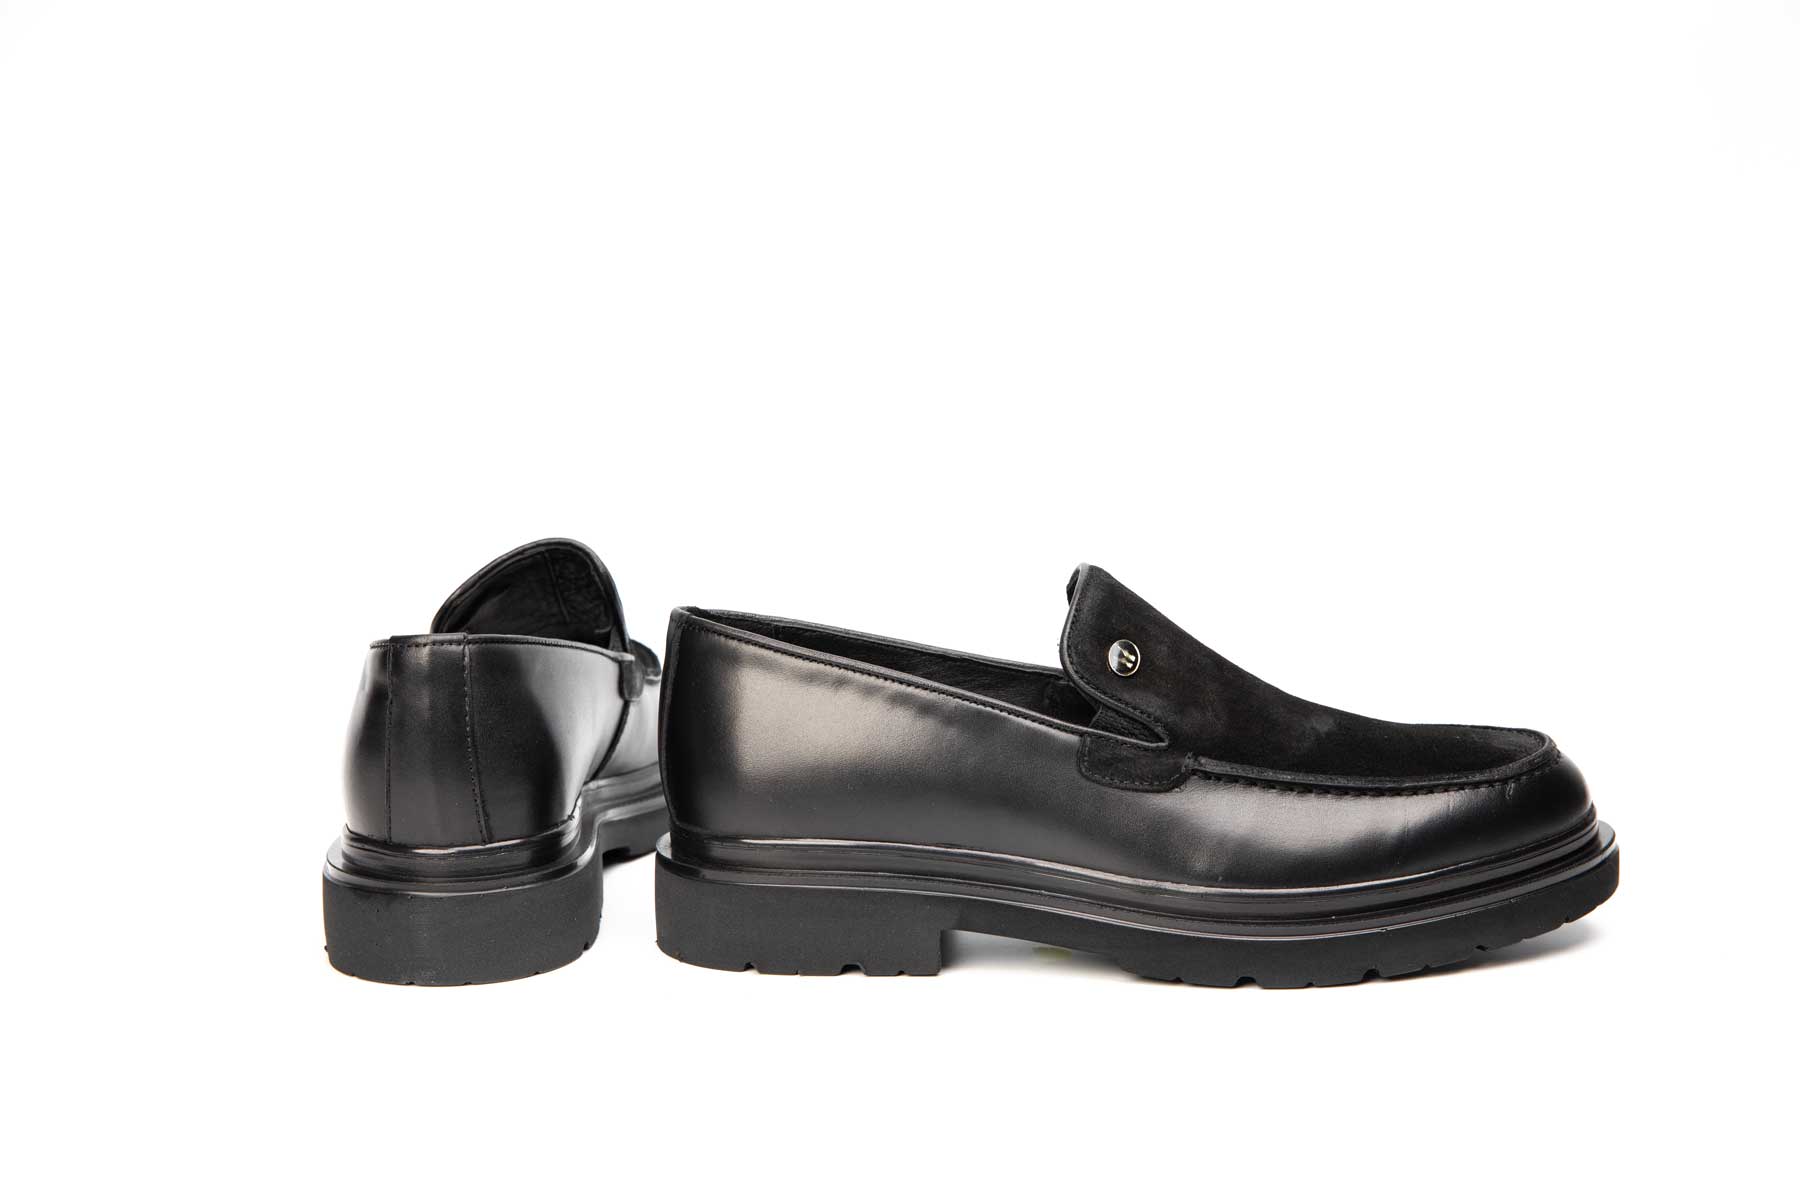 Pantofi barbati casual piele naturala Z01 negru velur box